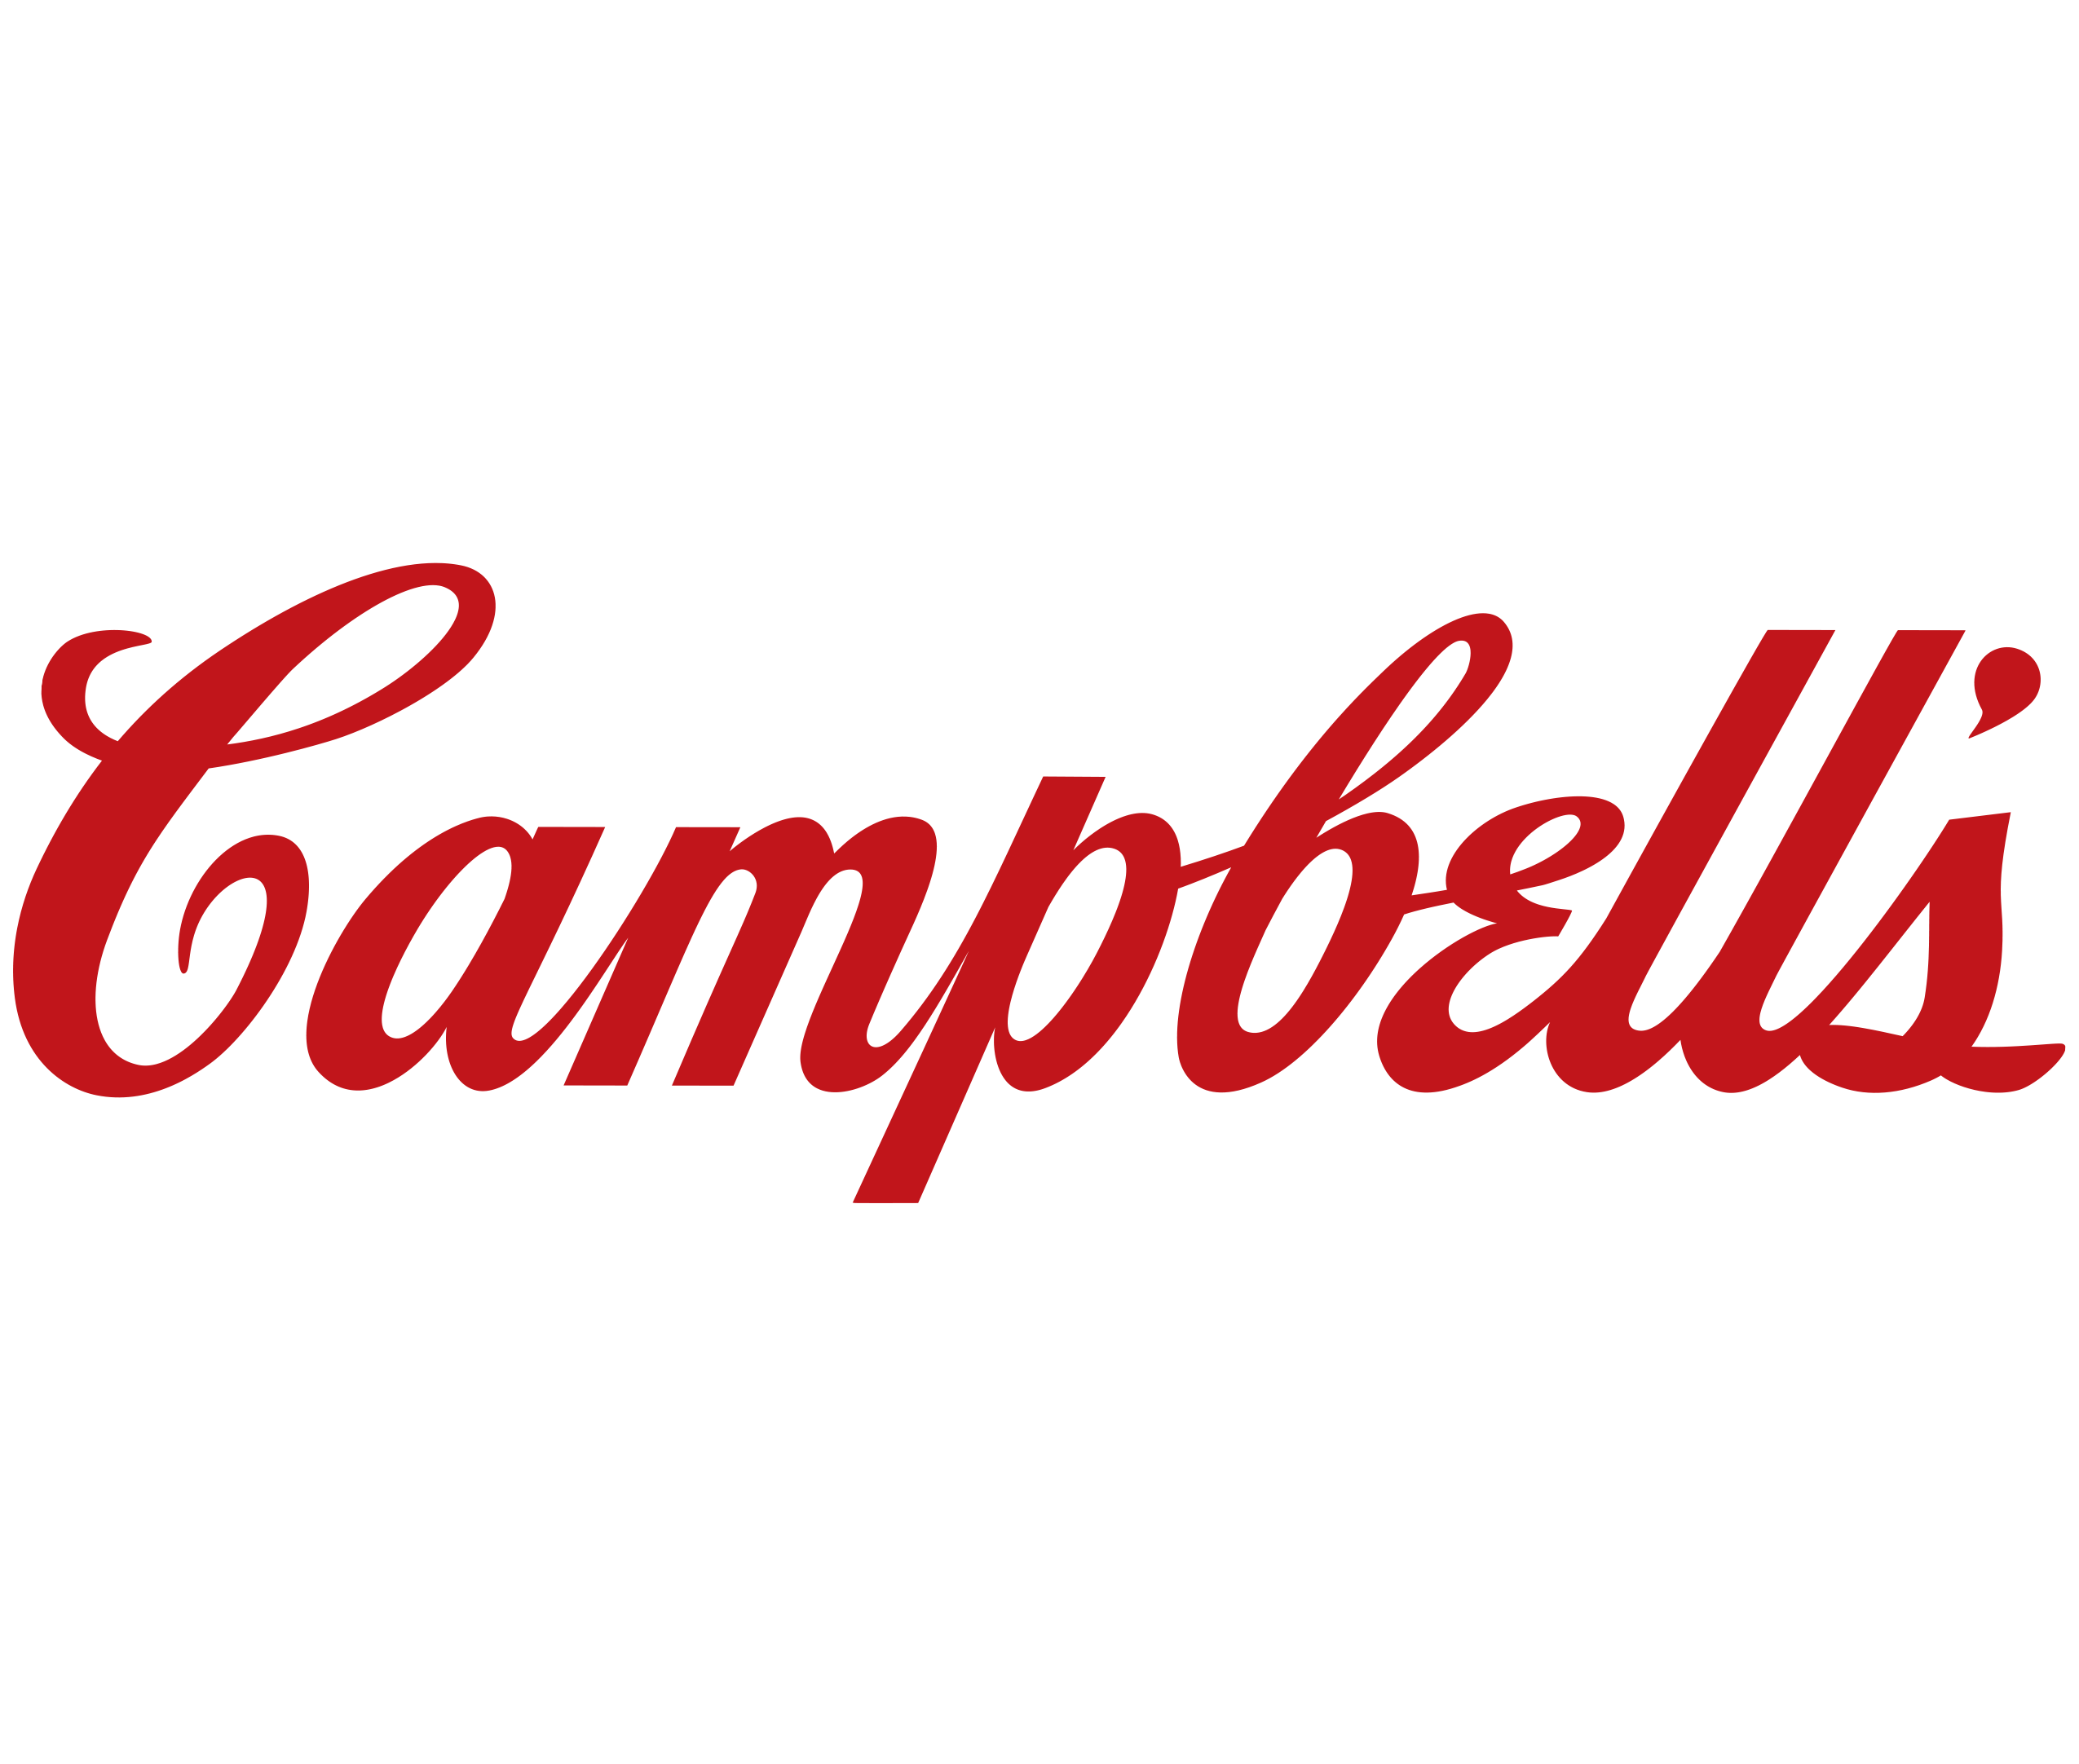 campall Logo photo - 1